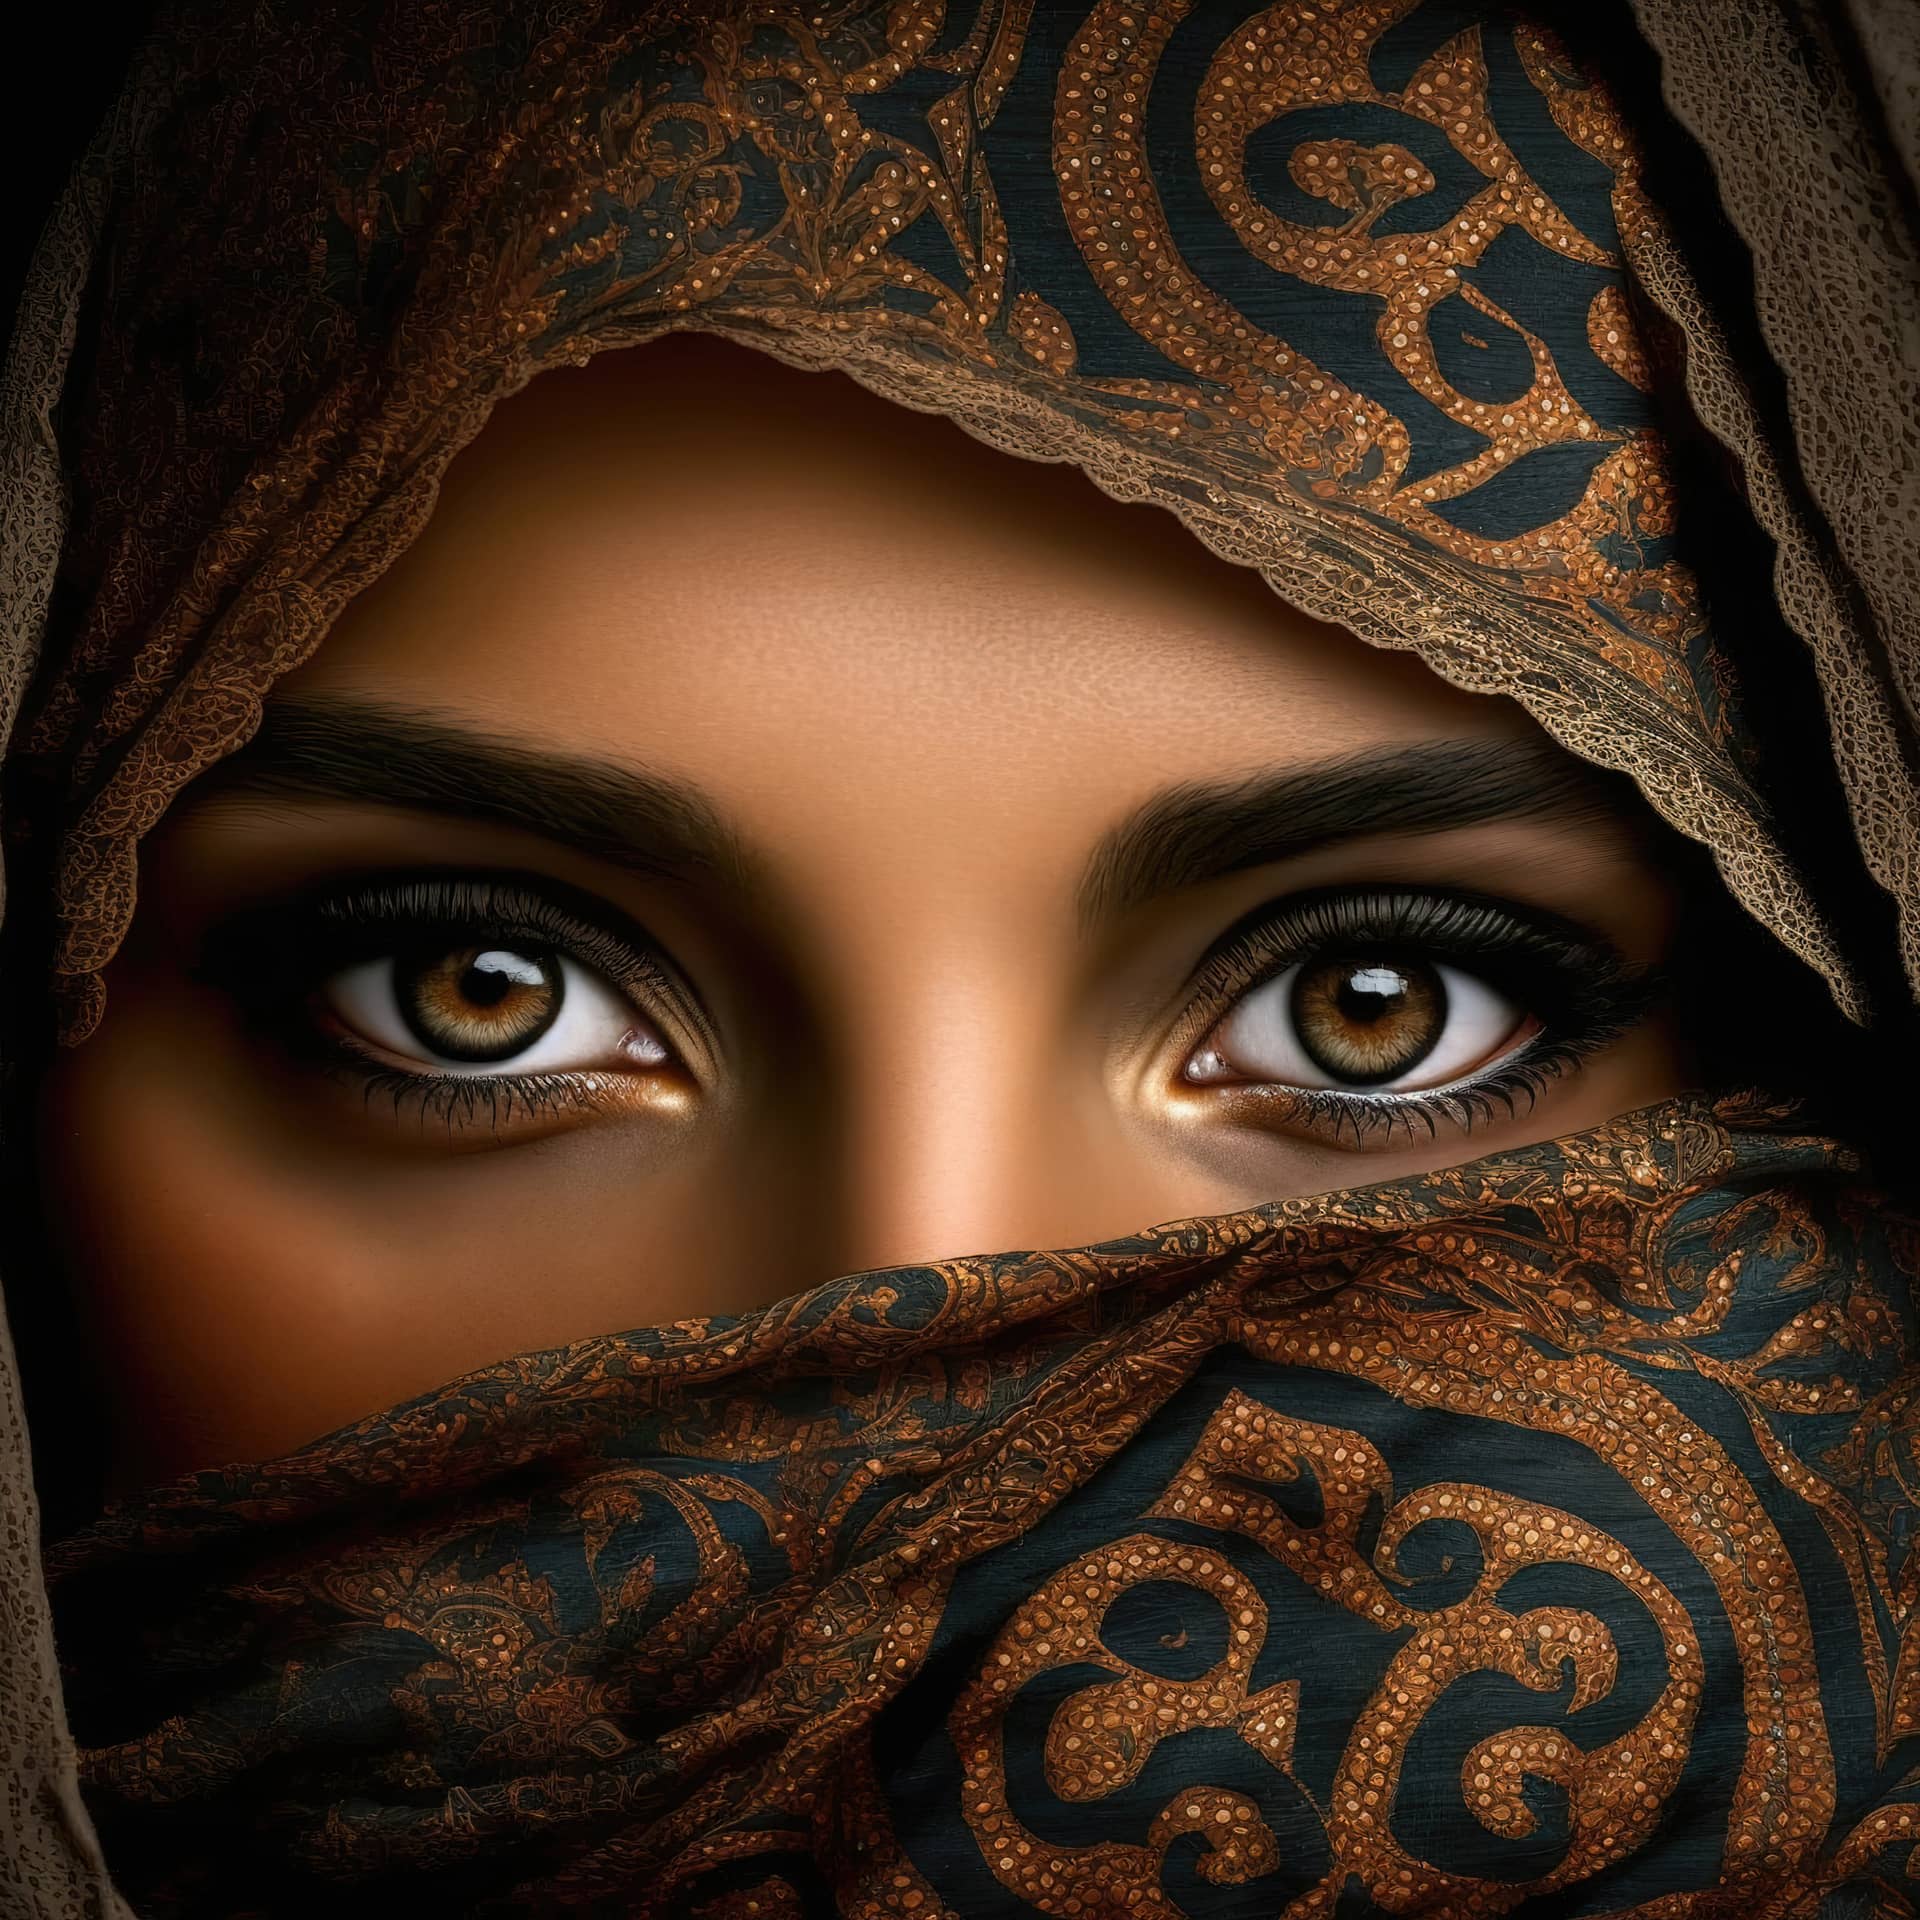 Woman headscarf islamic girl with beautiful eyes closeup 3d illustration